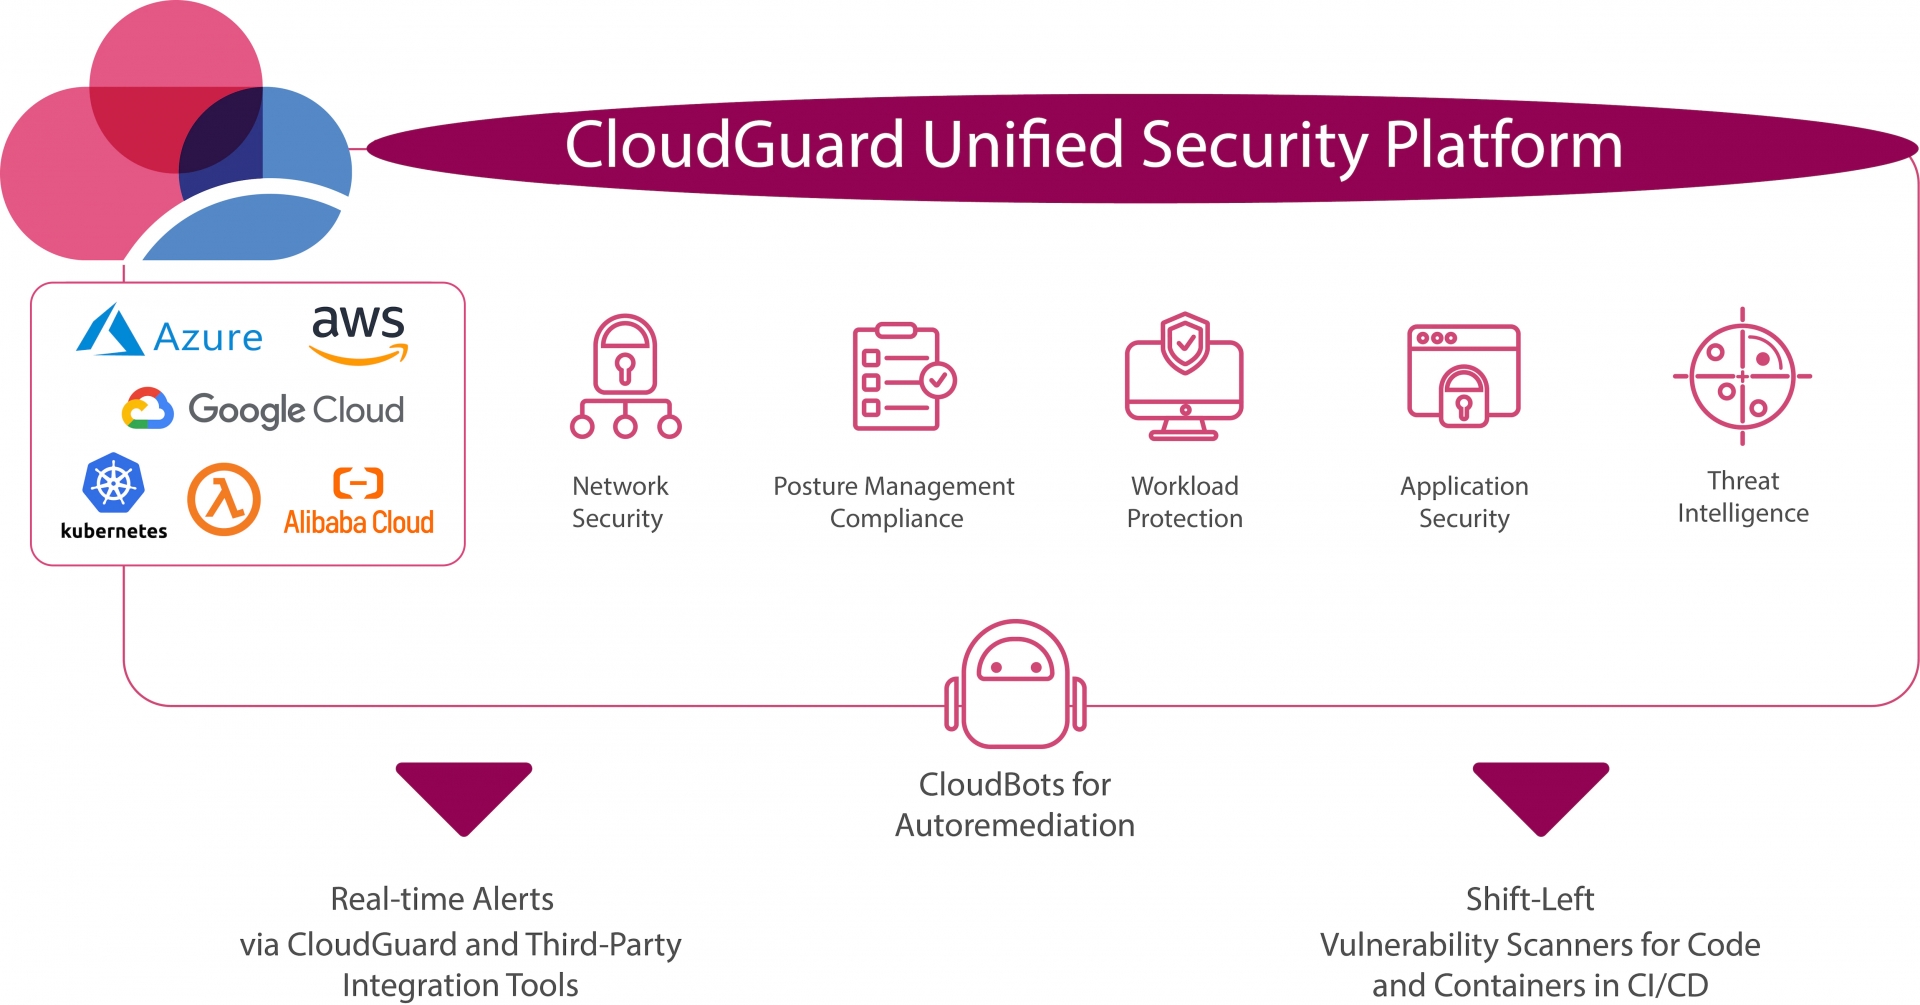 cloudguard-unified-security-platform-image-new